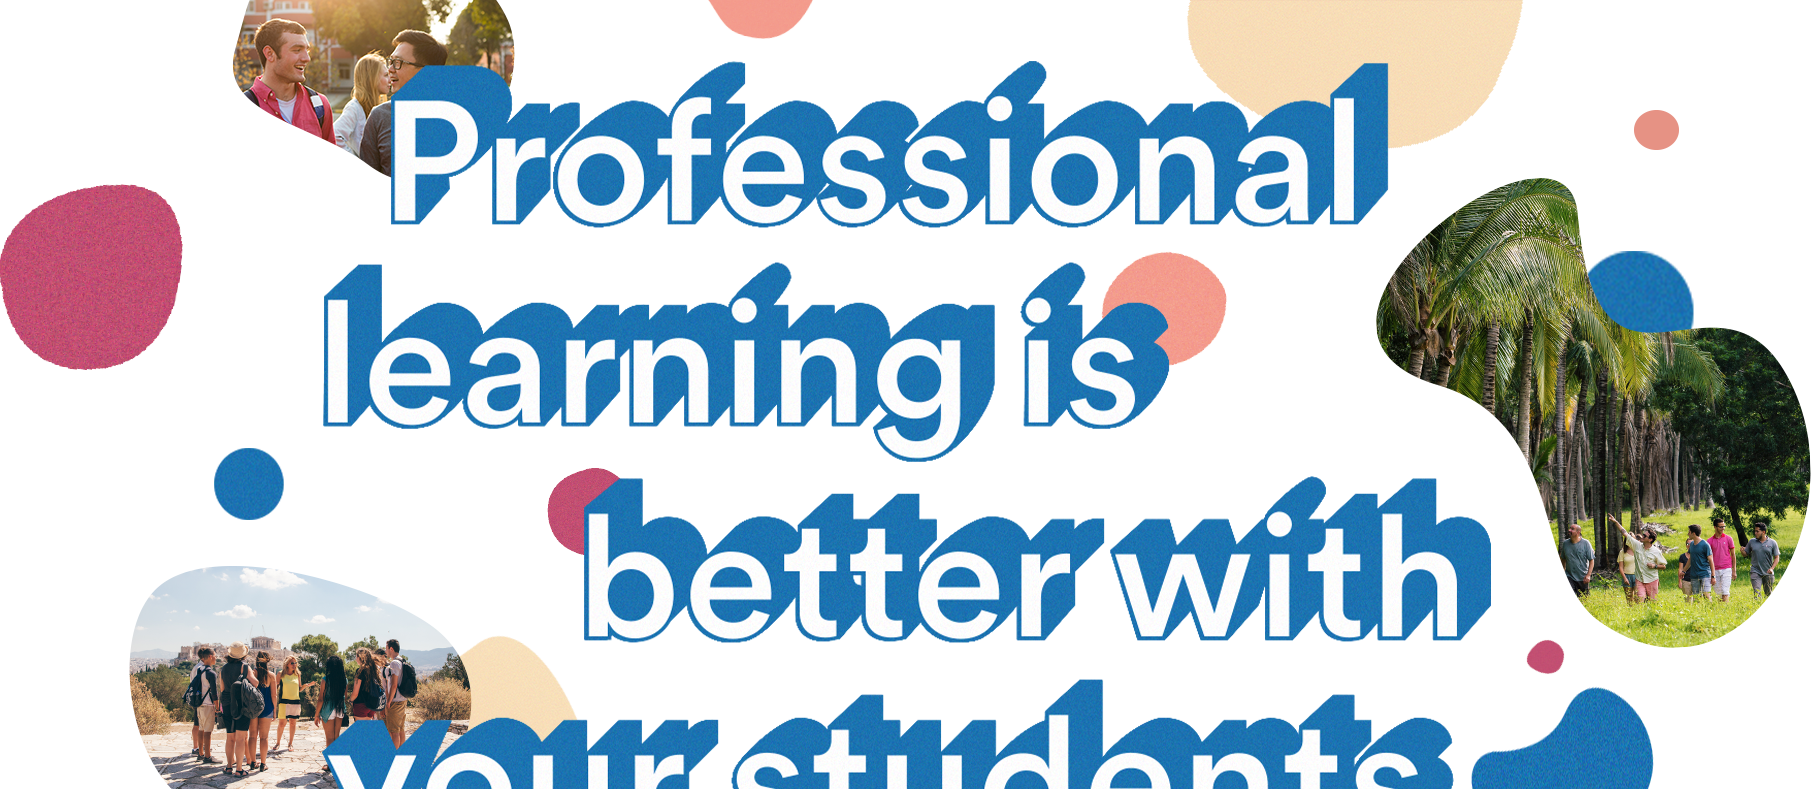 EF professional learning headline image: top